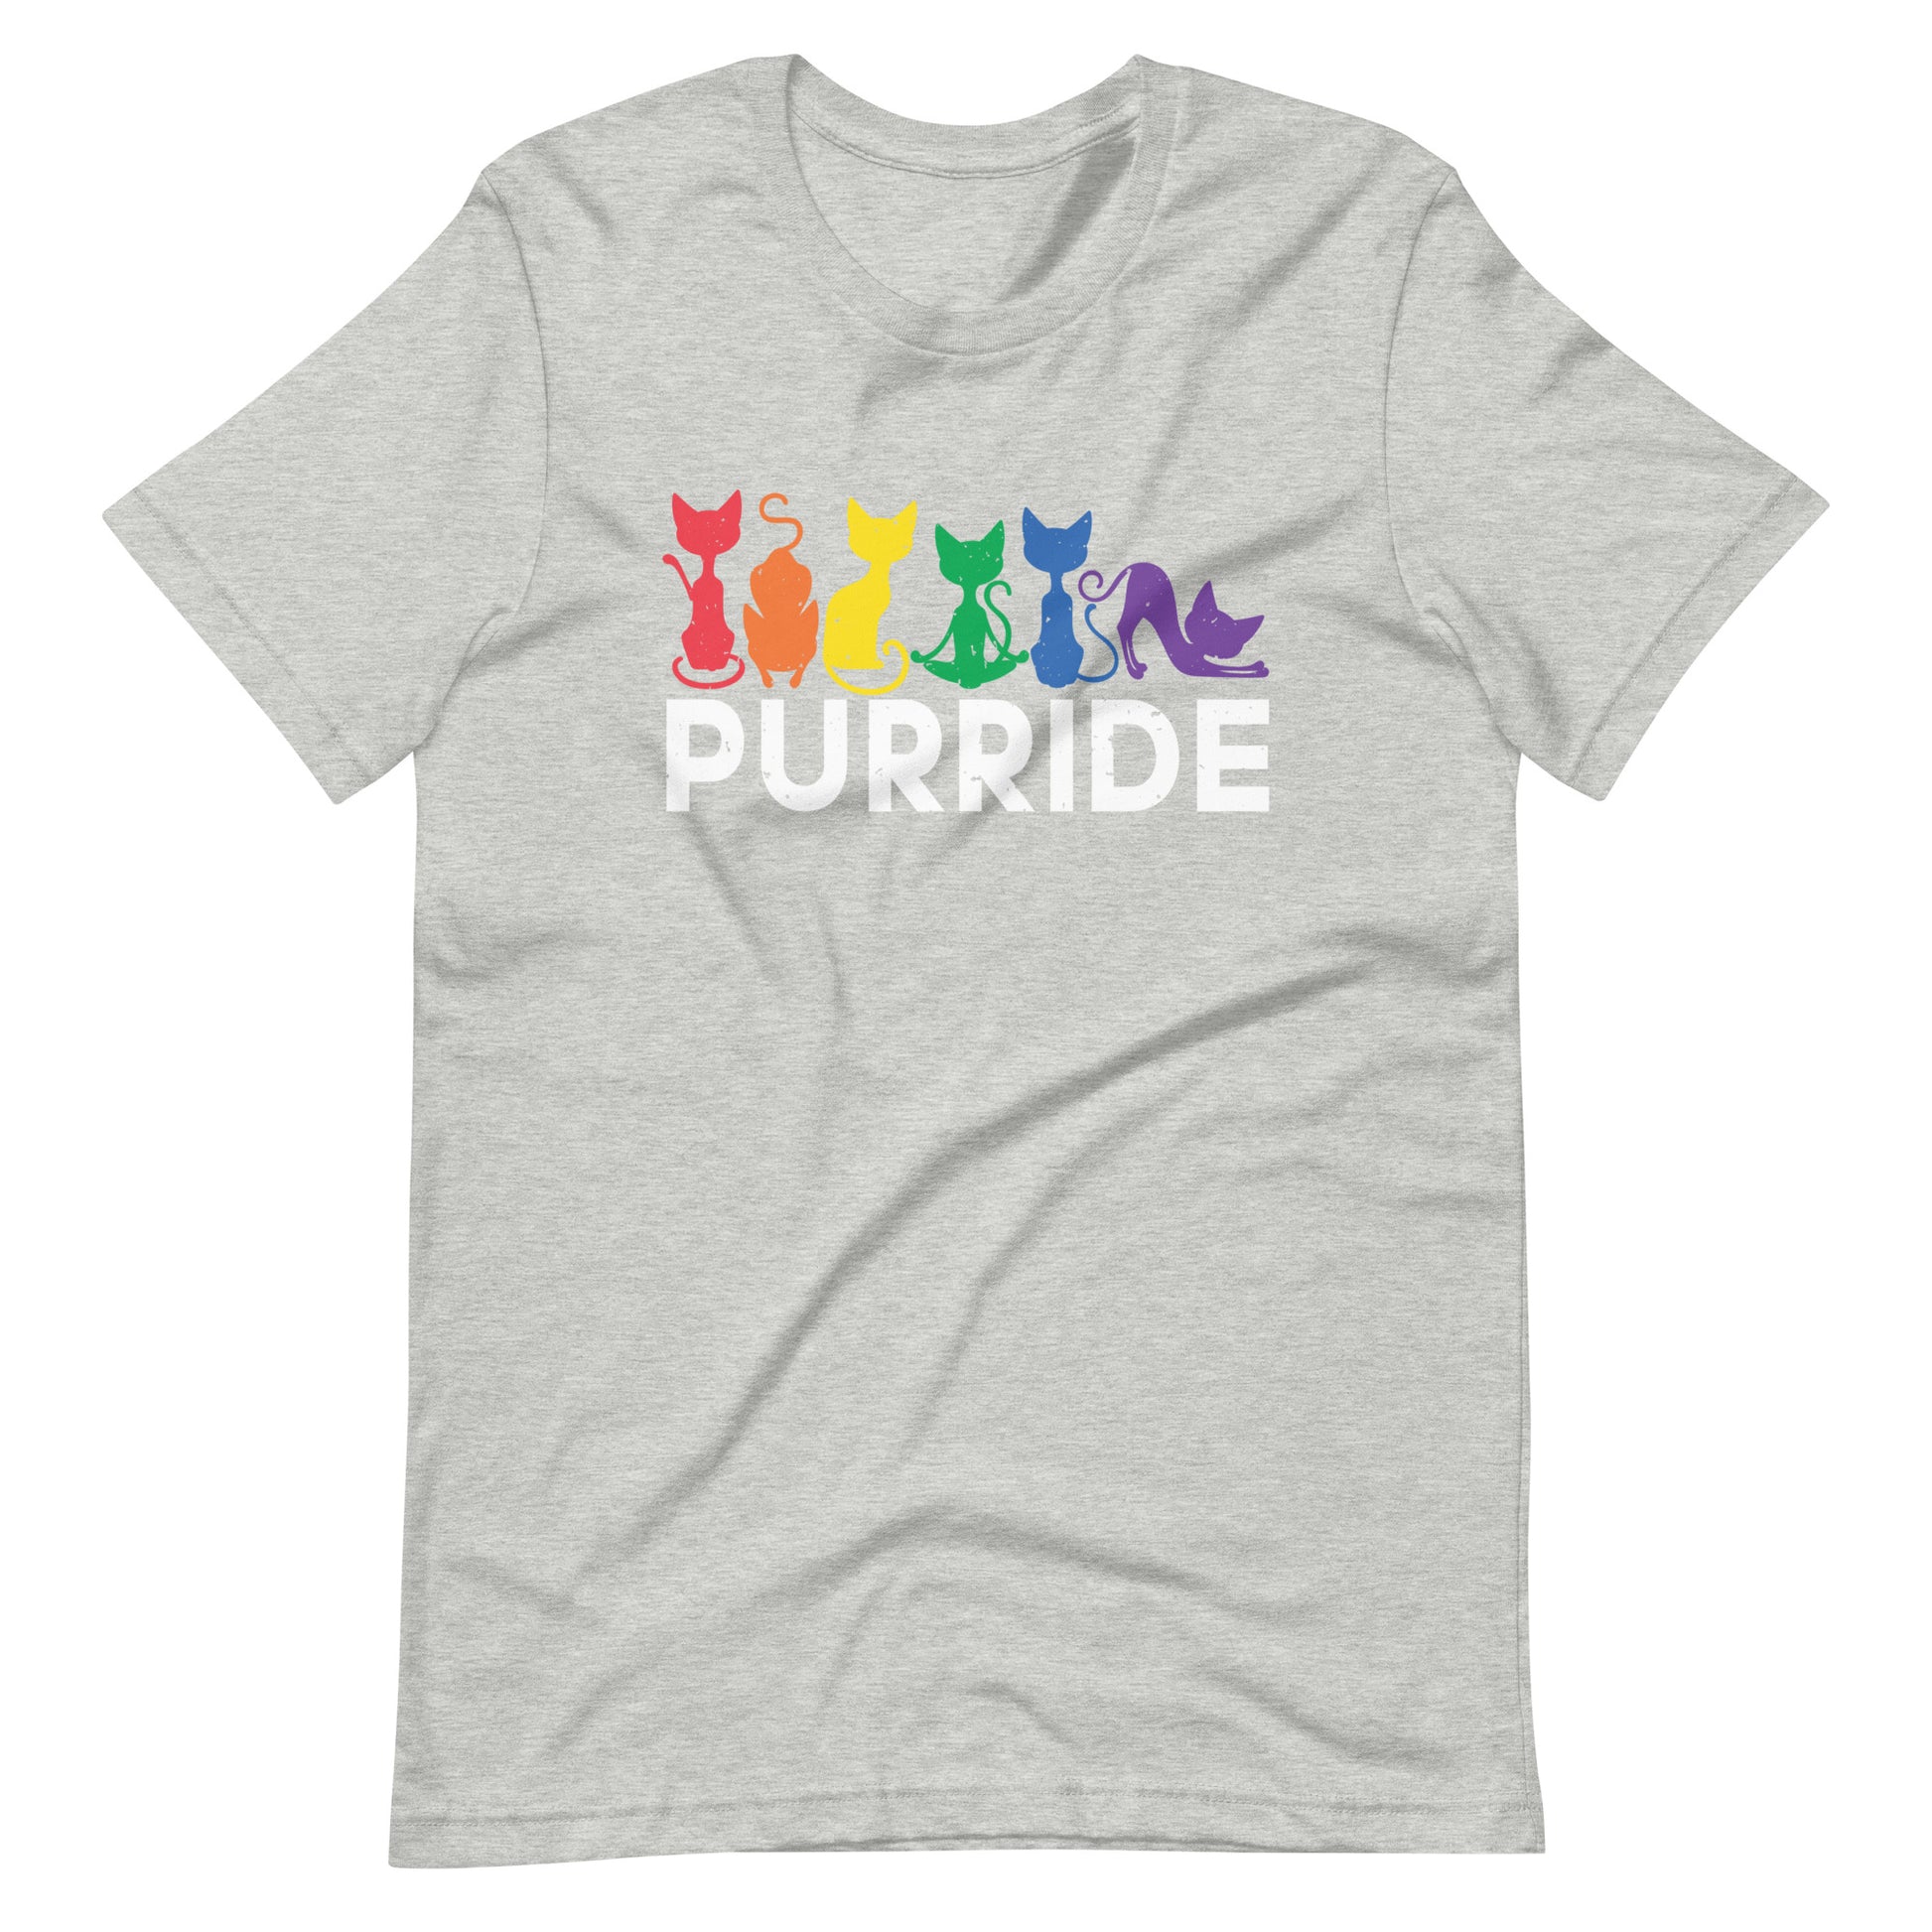 Purride Cat Unisex T-Shirt - Gay Pride Shirt - gay pride apparel